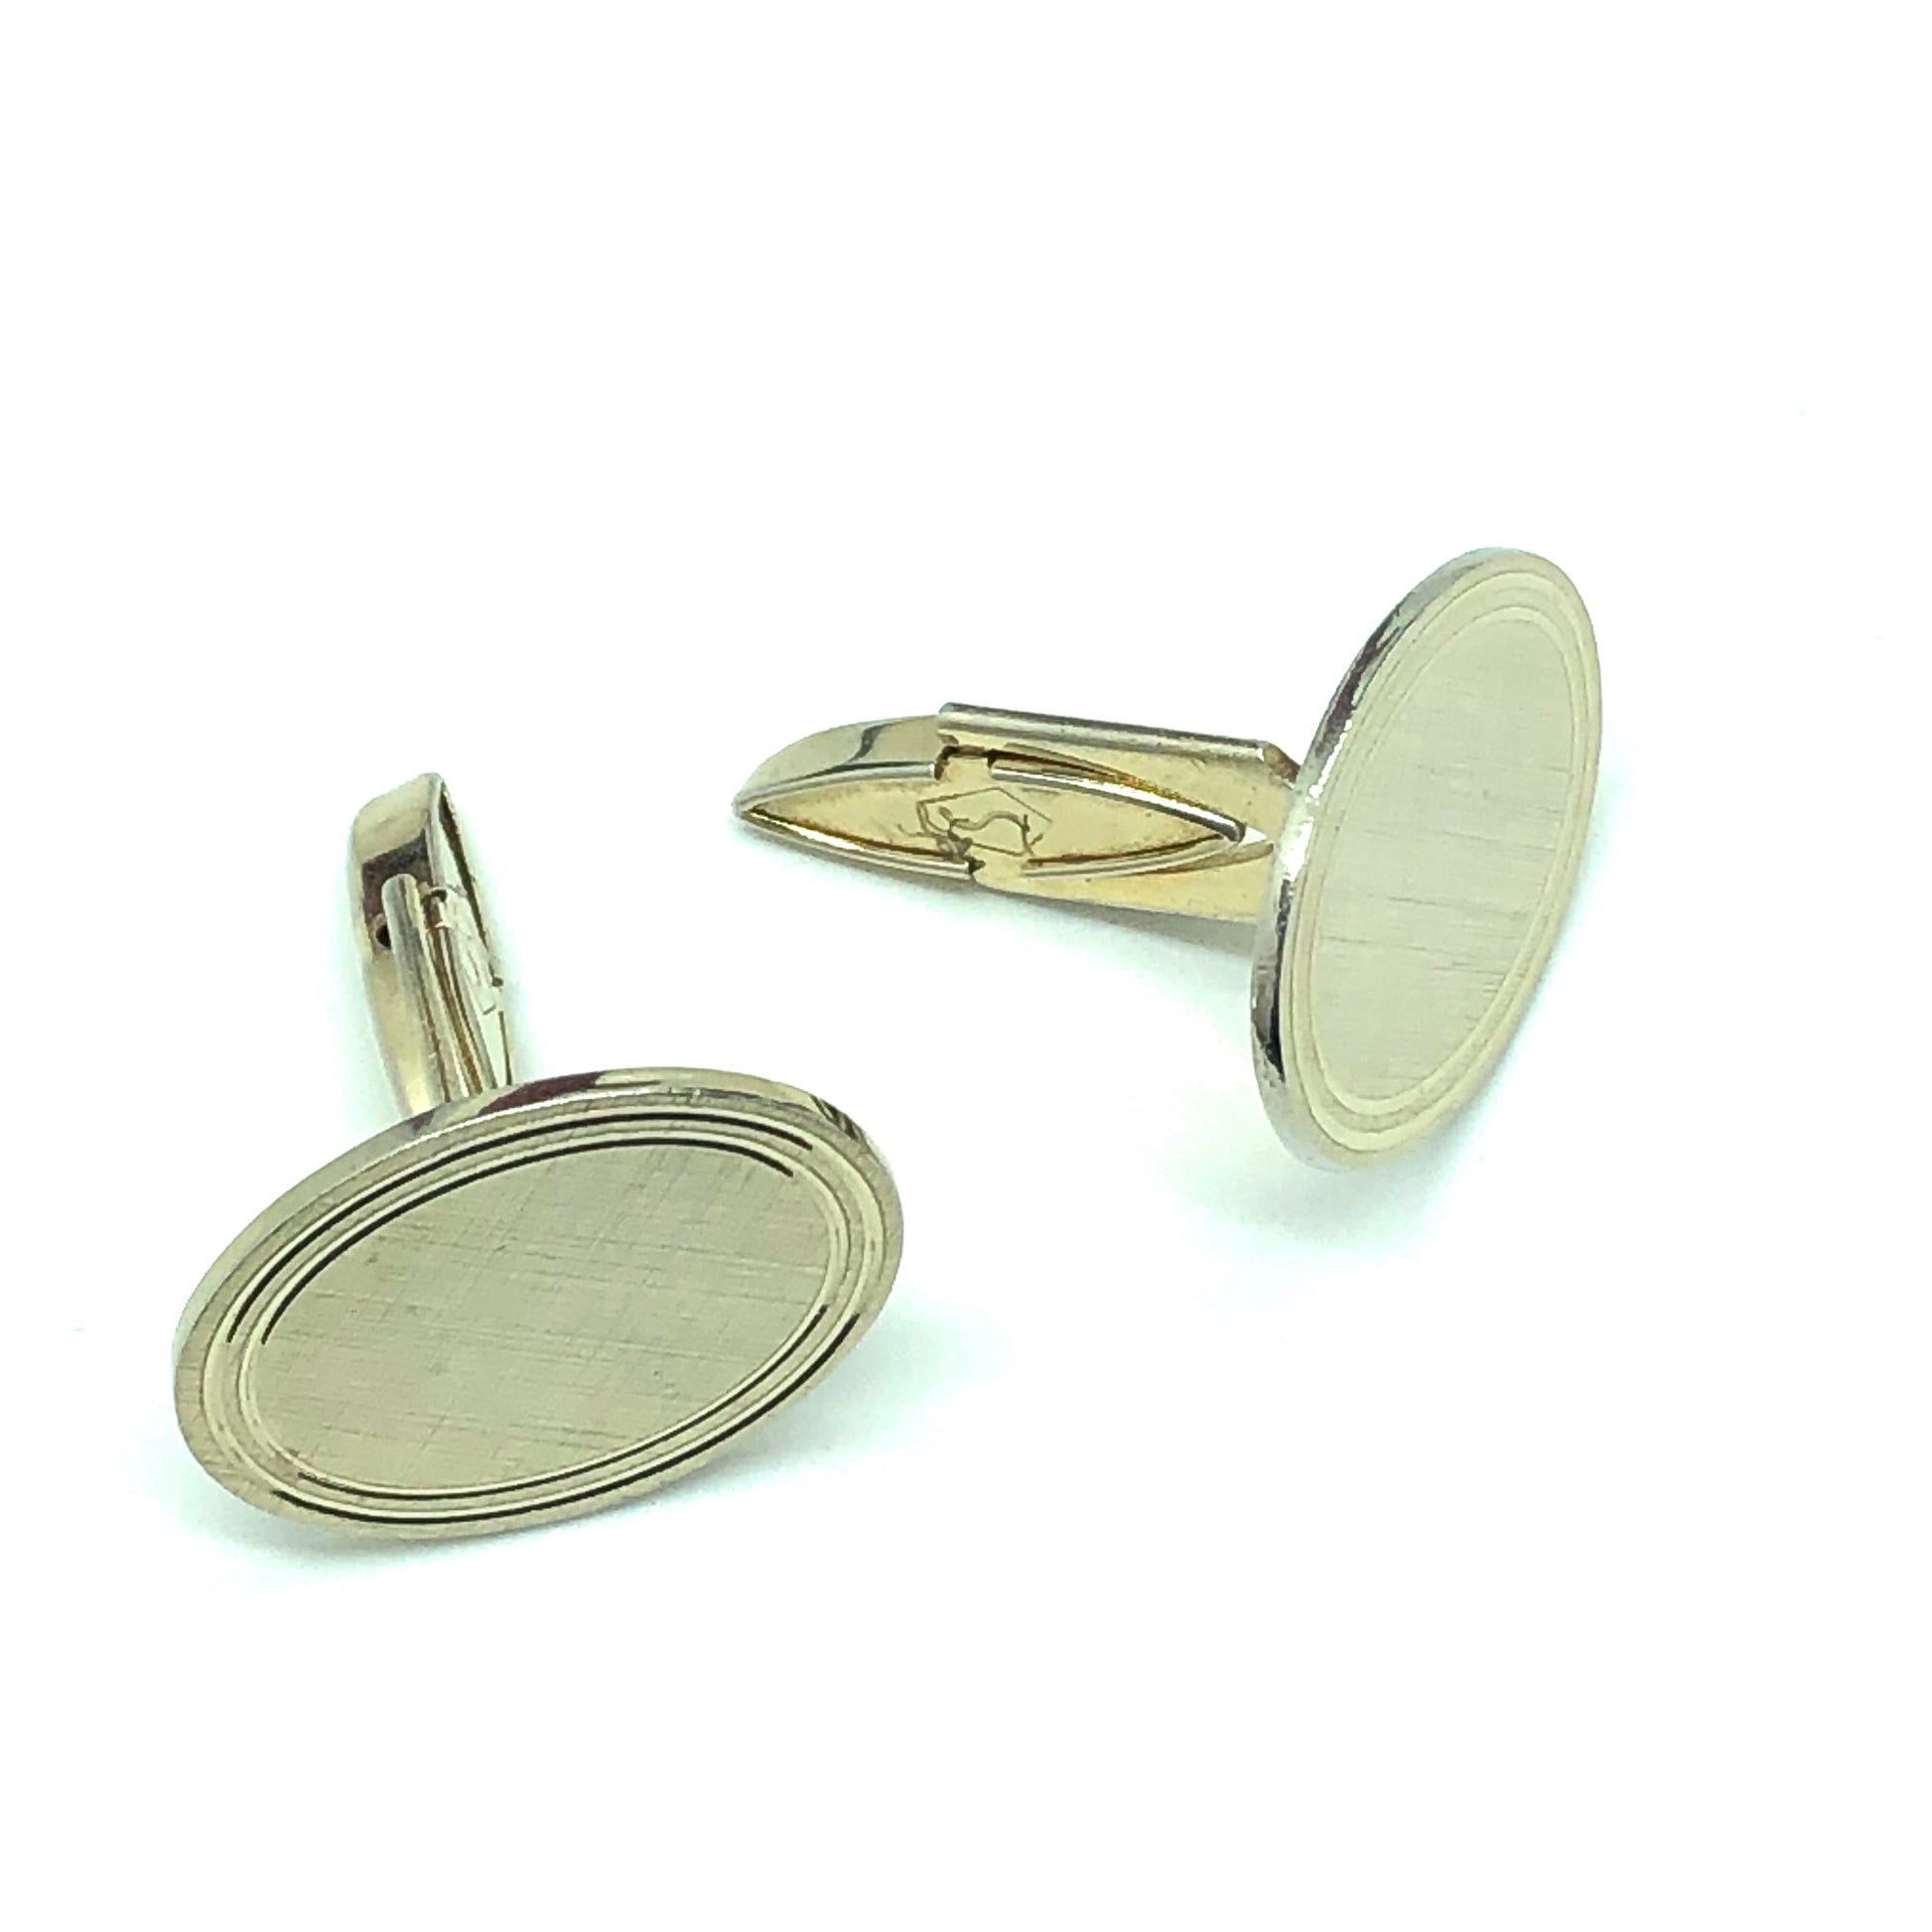 Vintage Jewelry Website 2022 Blingschlingers.com - Mens Cufflinks Oval Bullet Back Style - Light Gold Sterling Silver w/ Etched Crosshatch Design - Swank